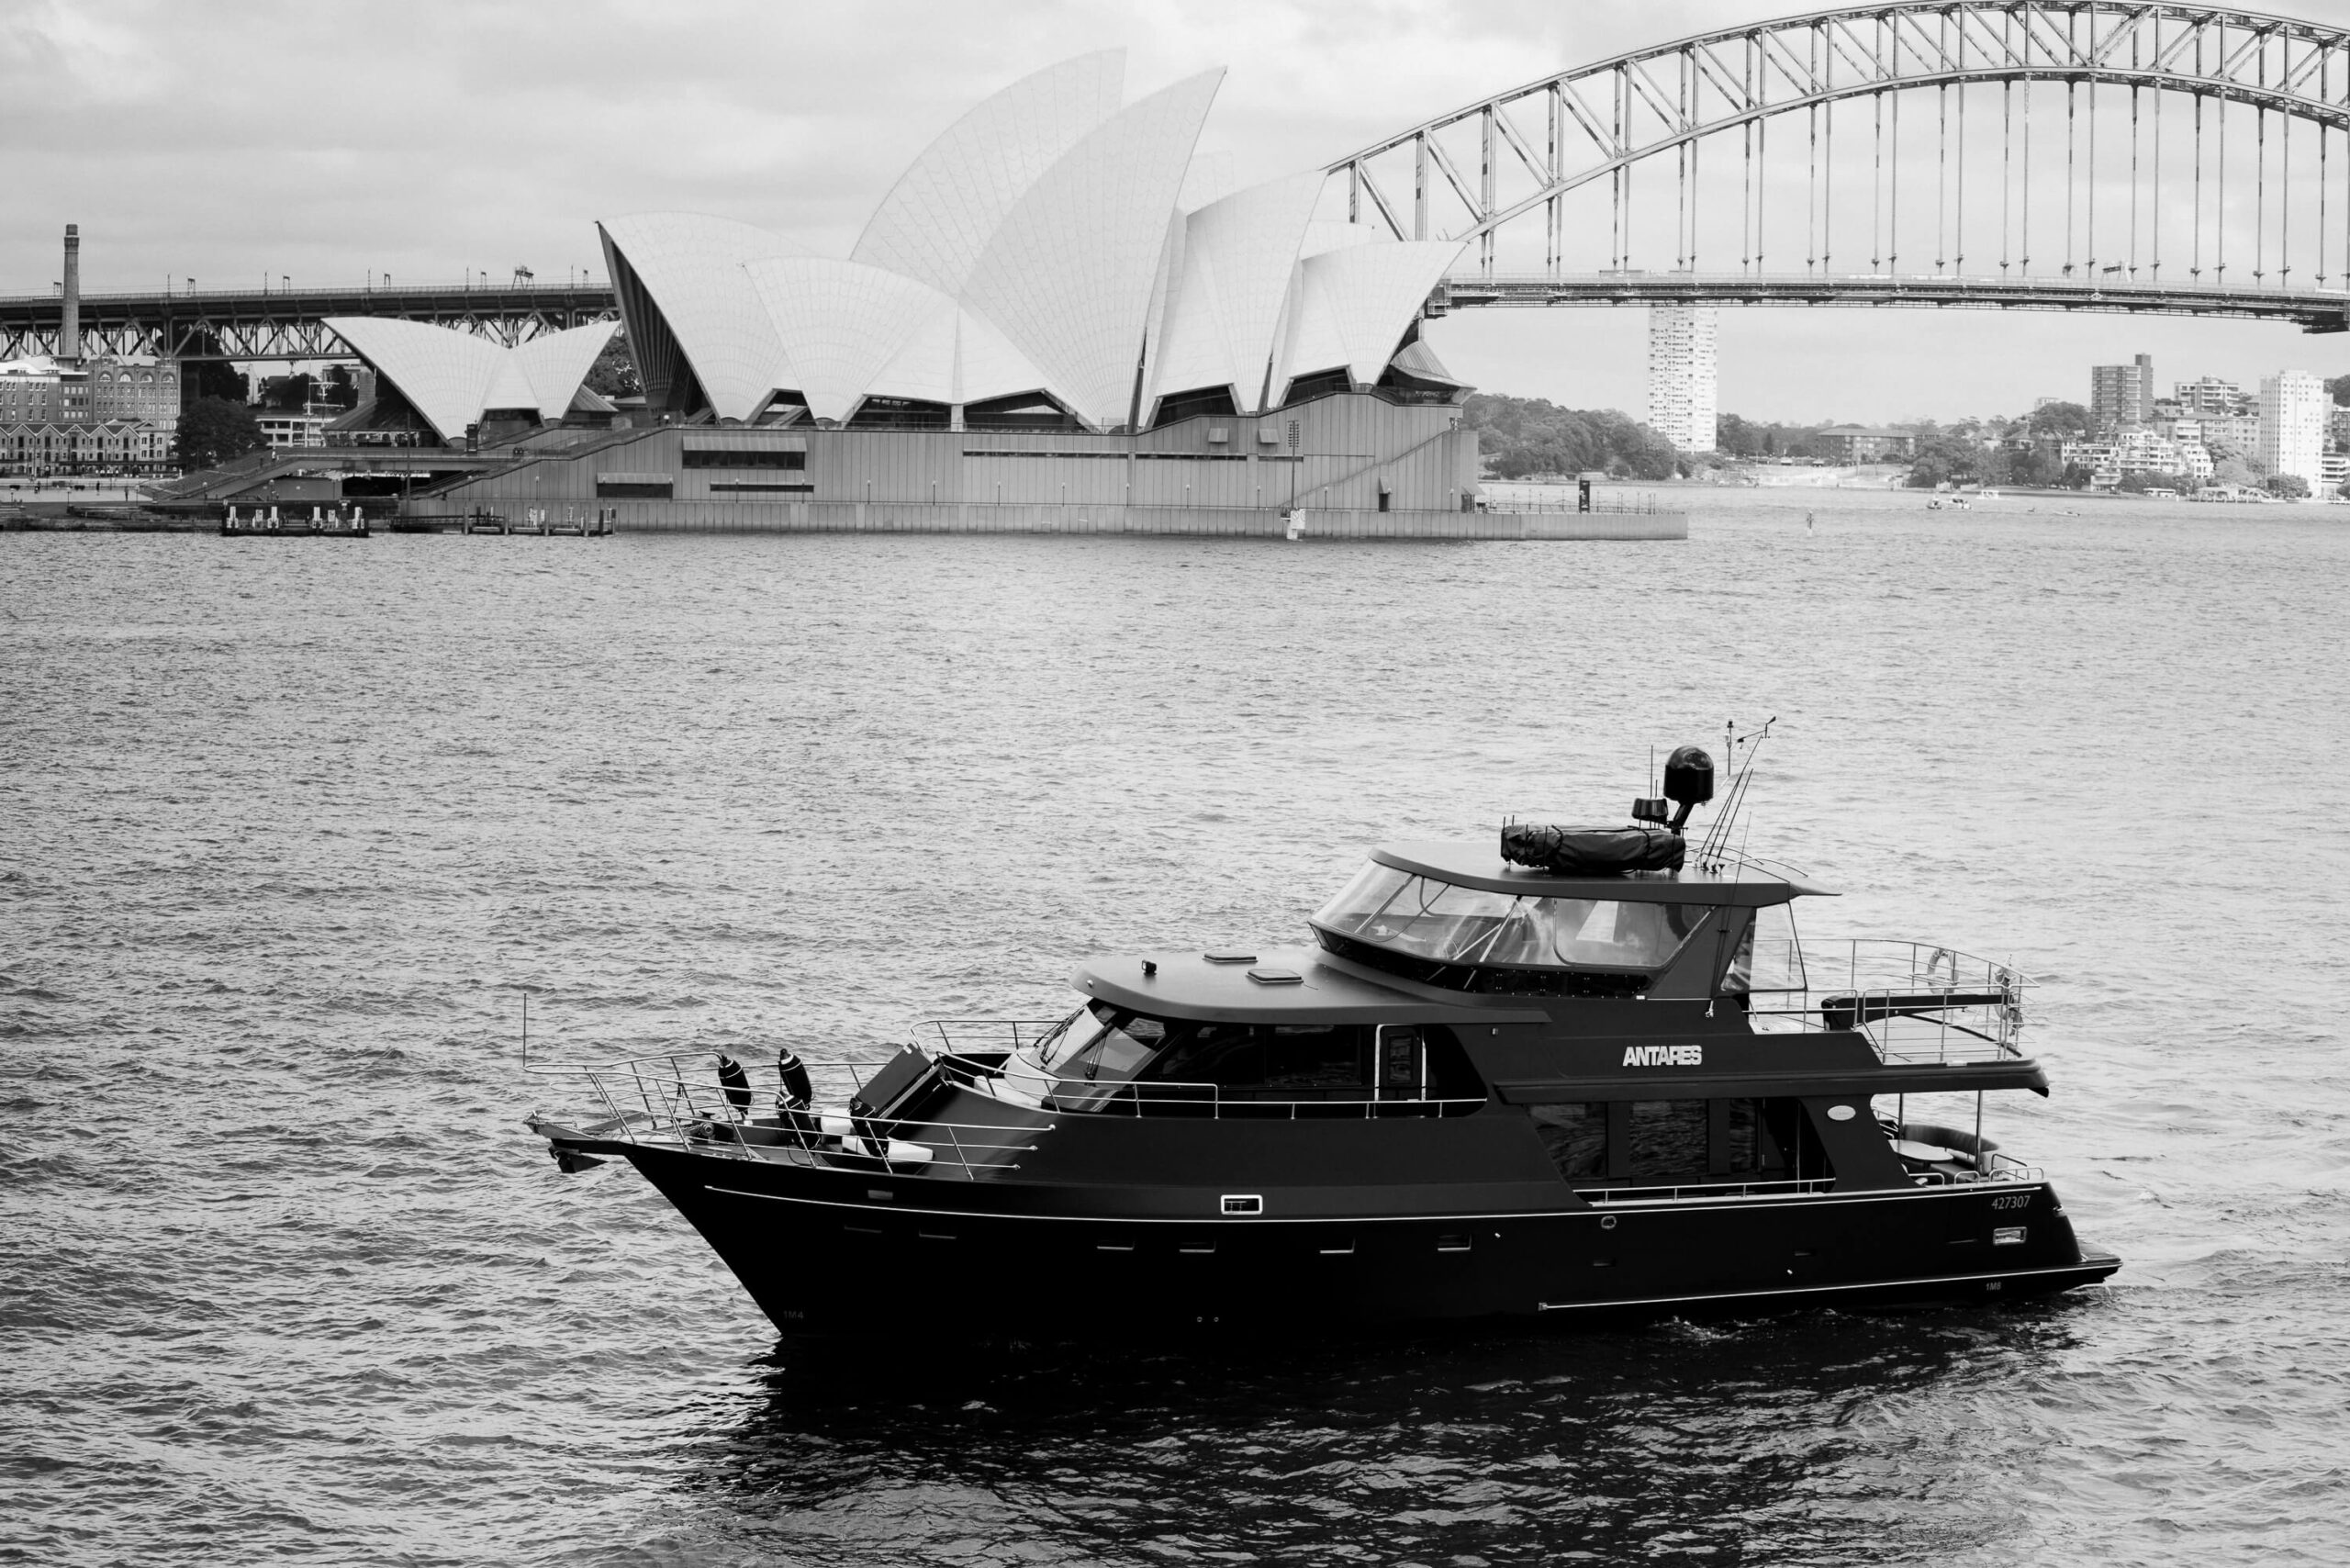 Antares boat hire sydney